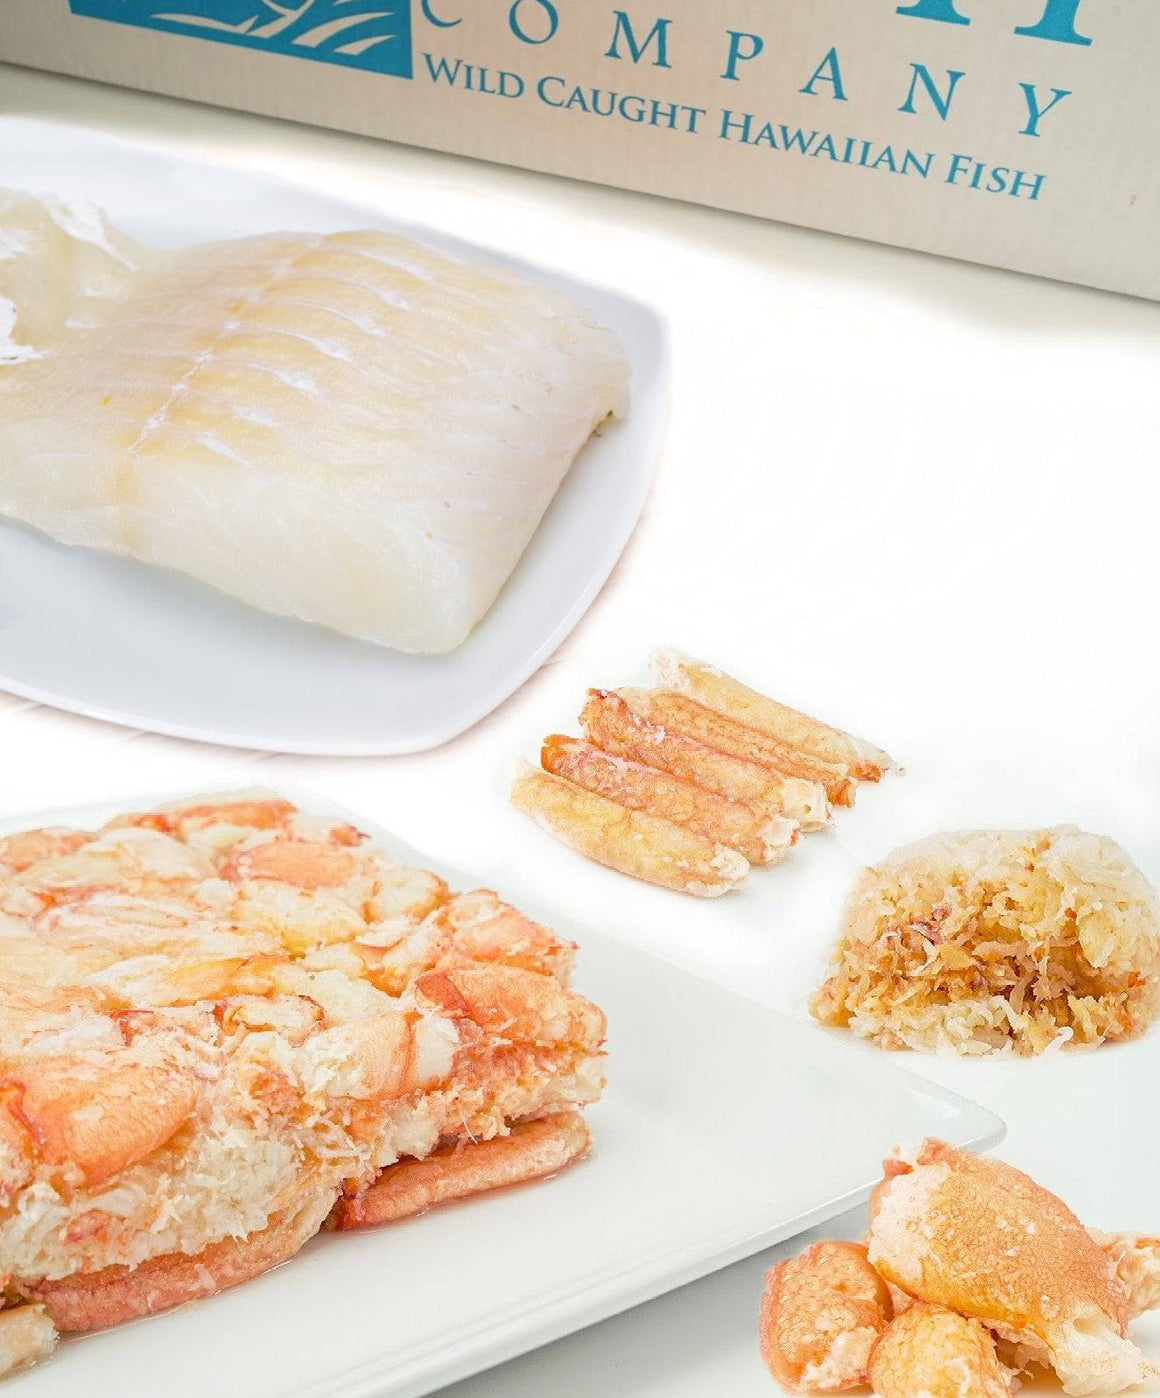 Halibut 2 lbs And Deep Sea Crab 2.5 lbs - Honolulu Fish